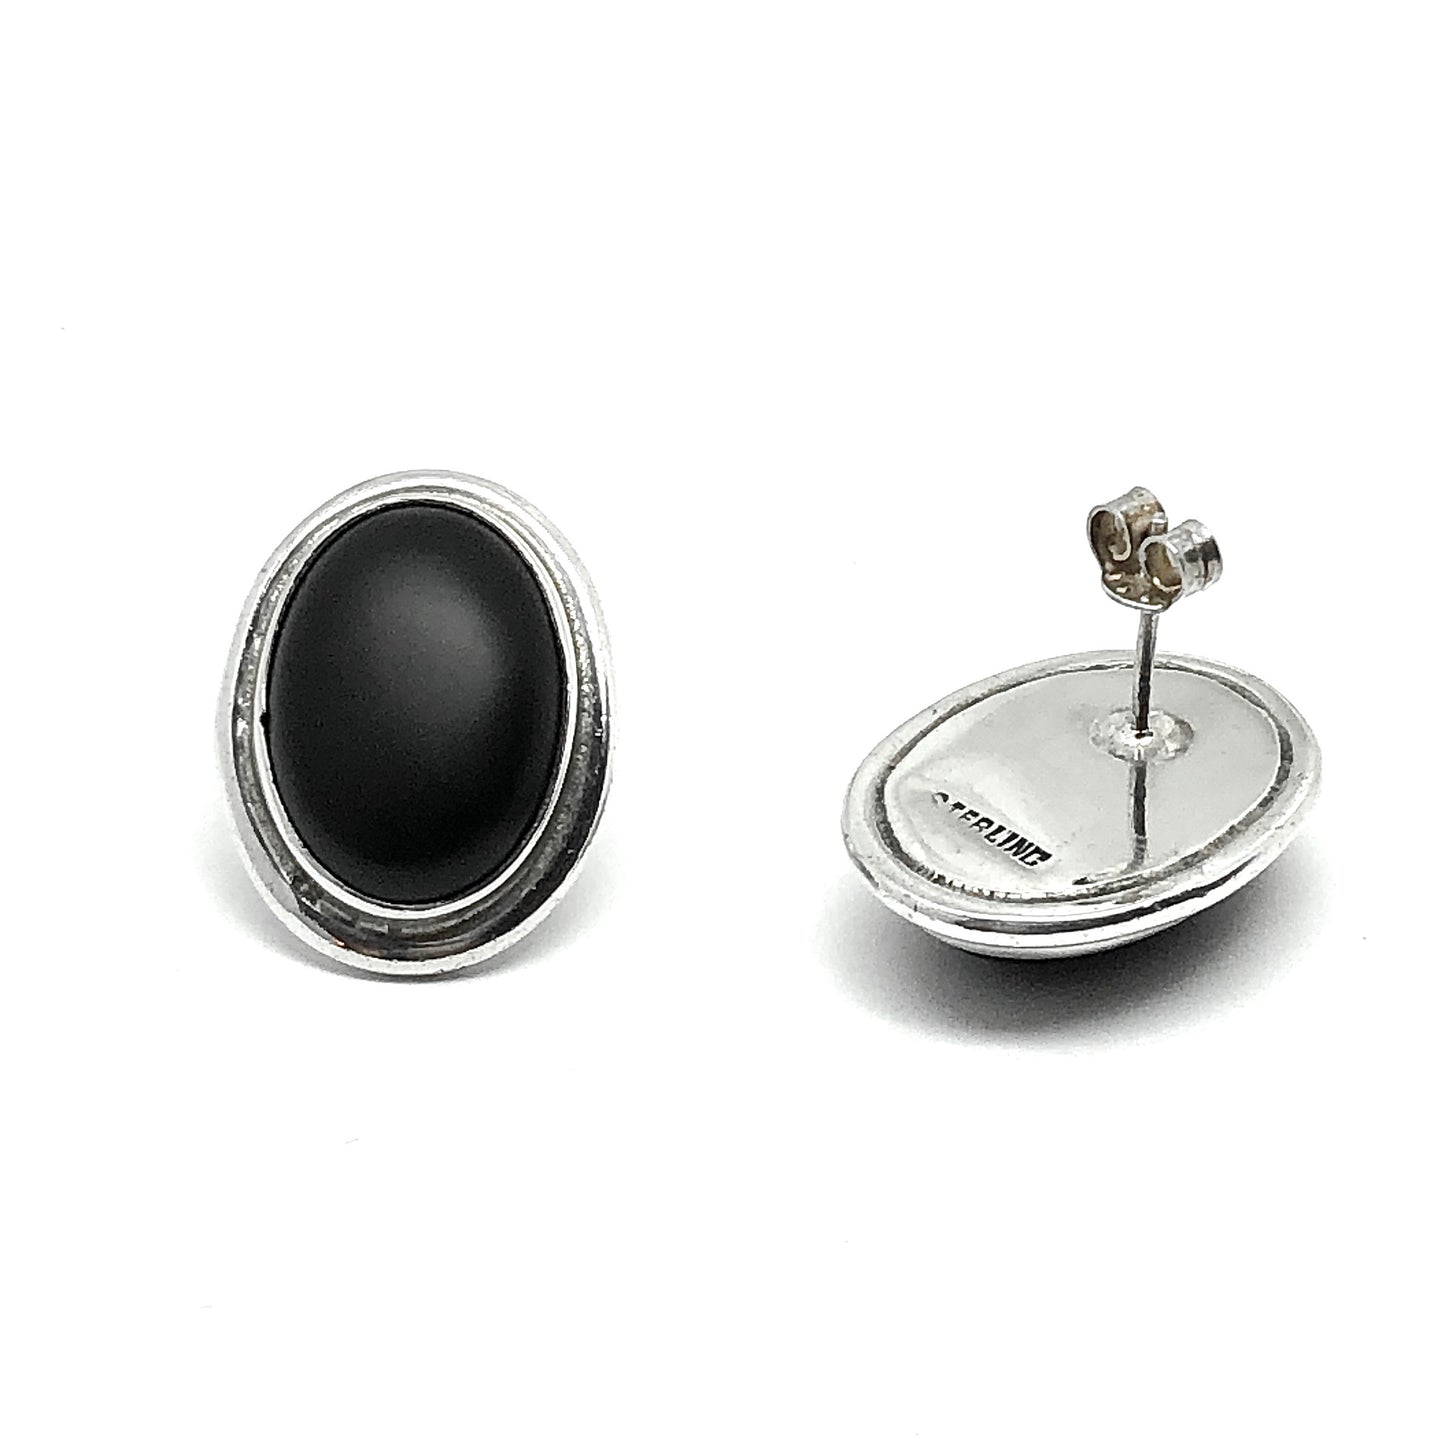 Vintage Sterling Silver Black Stone Oval Earrings